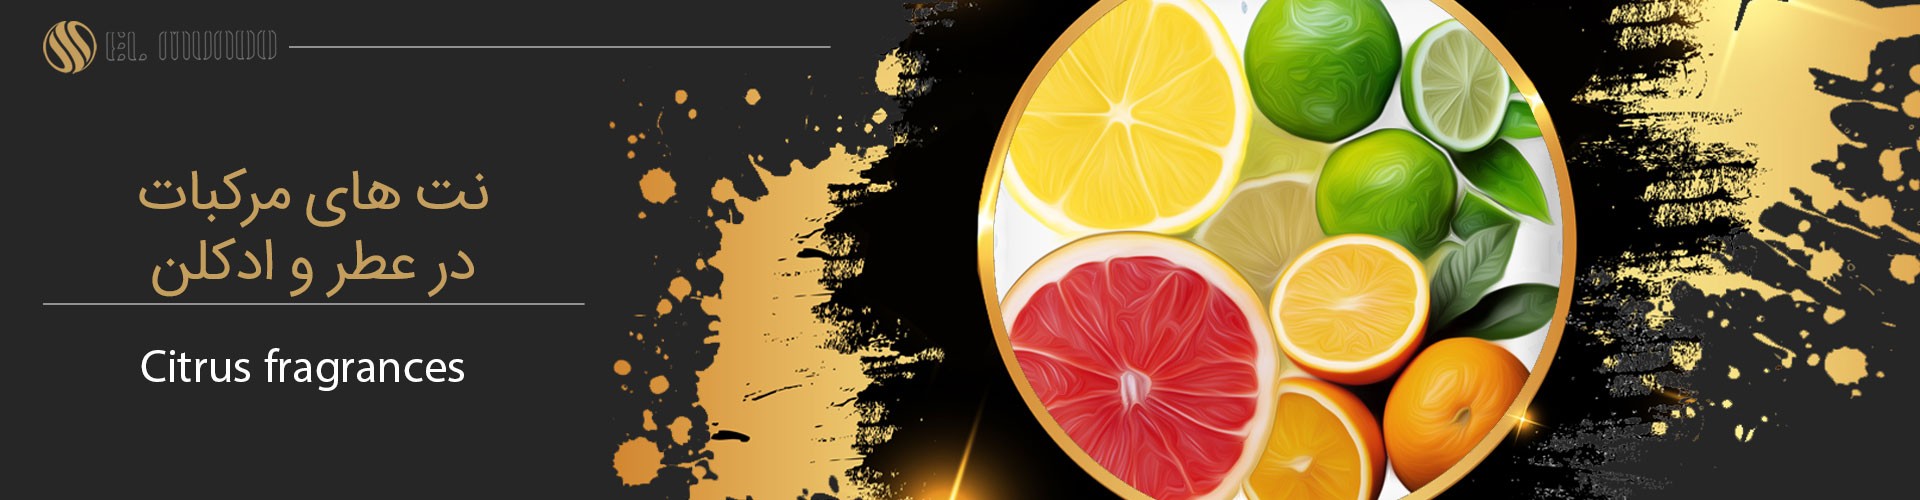 Citrus fragrances - نت مرکبات در عطرسازی